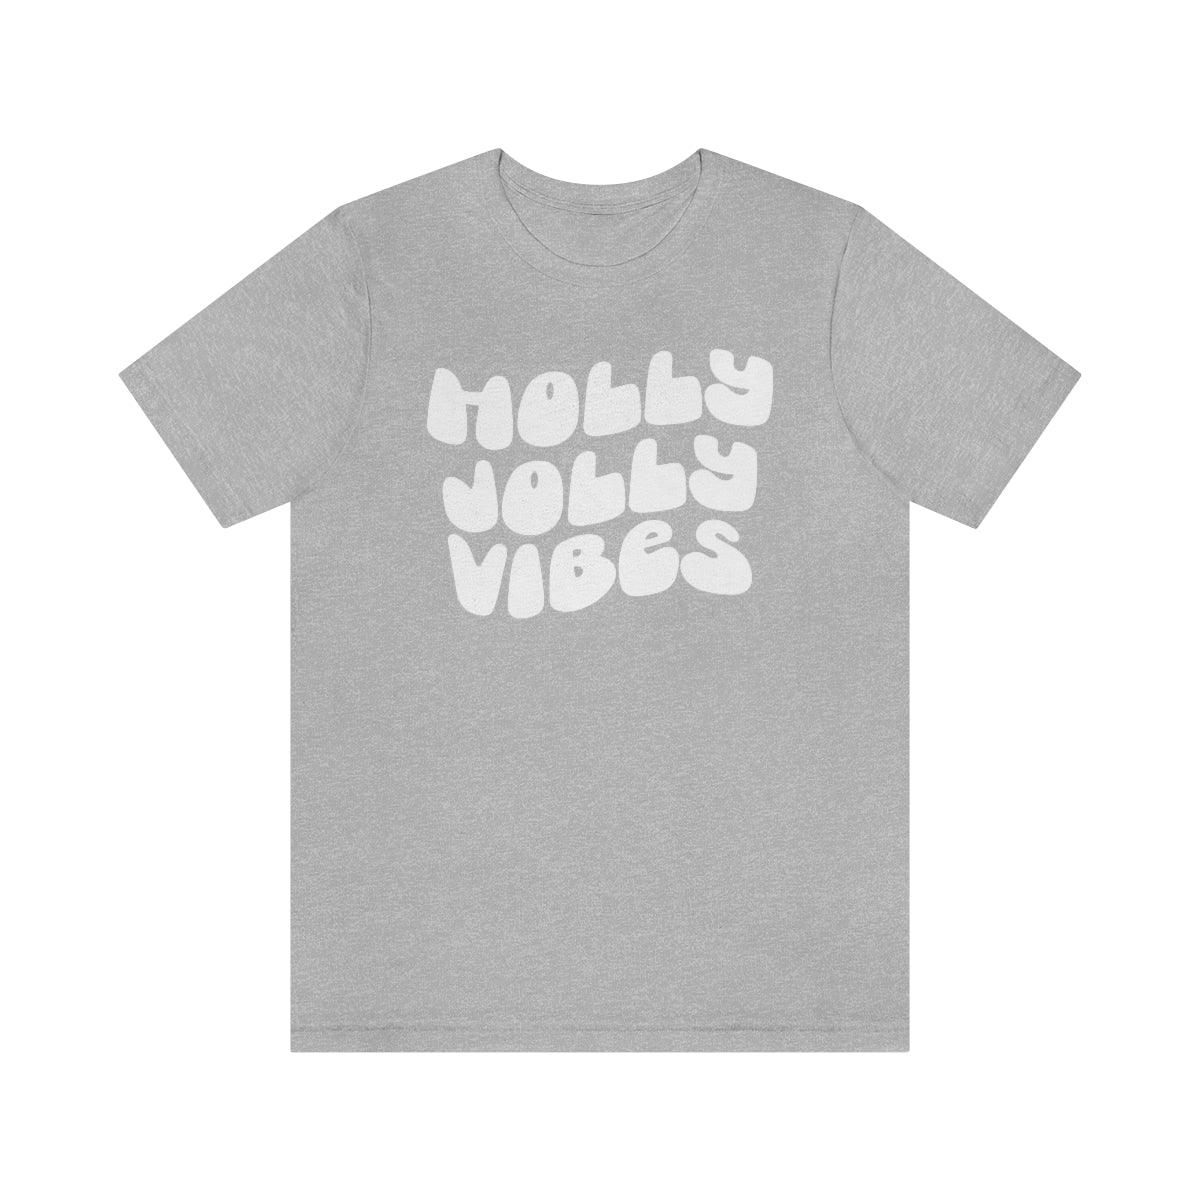 Retro Holly Jolly Vibes Christmas Shirt Short Sleeve Tee